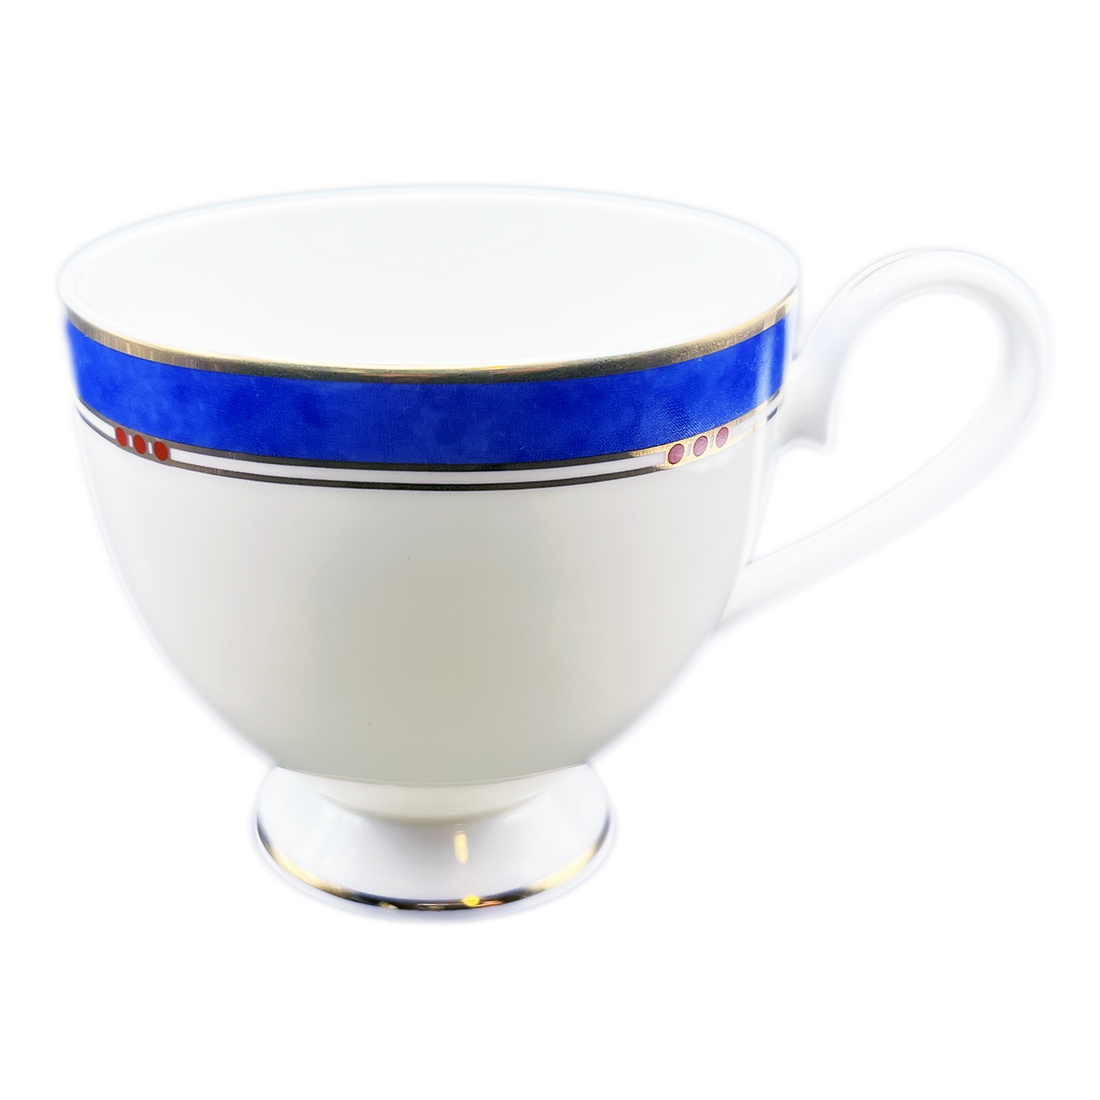 Star Trek | Enterprise D Tea Cup Limited Edition Prop Replica